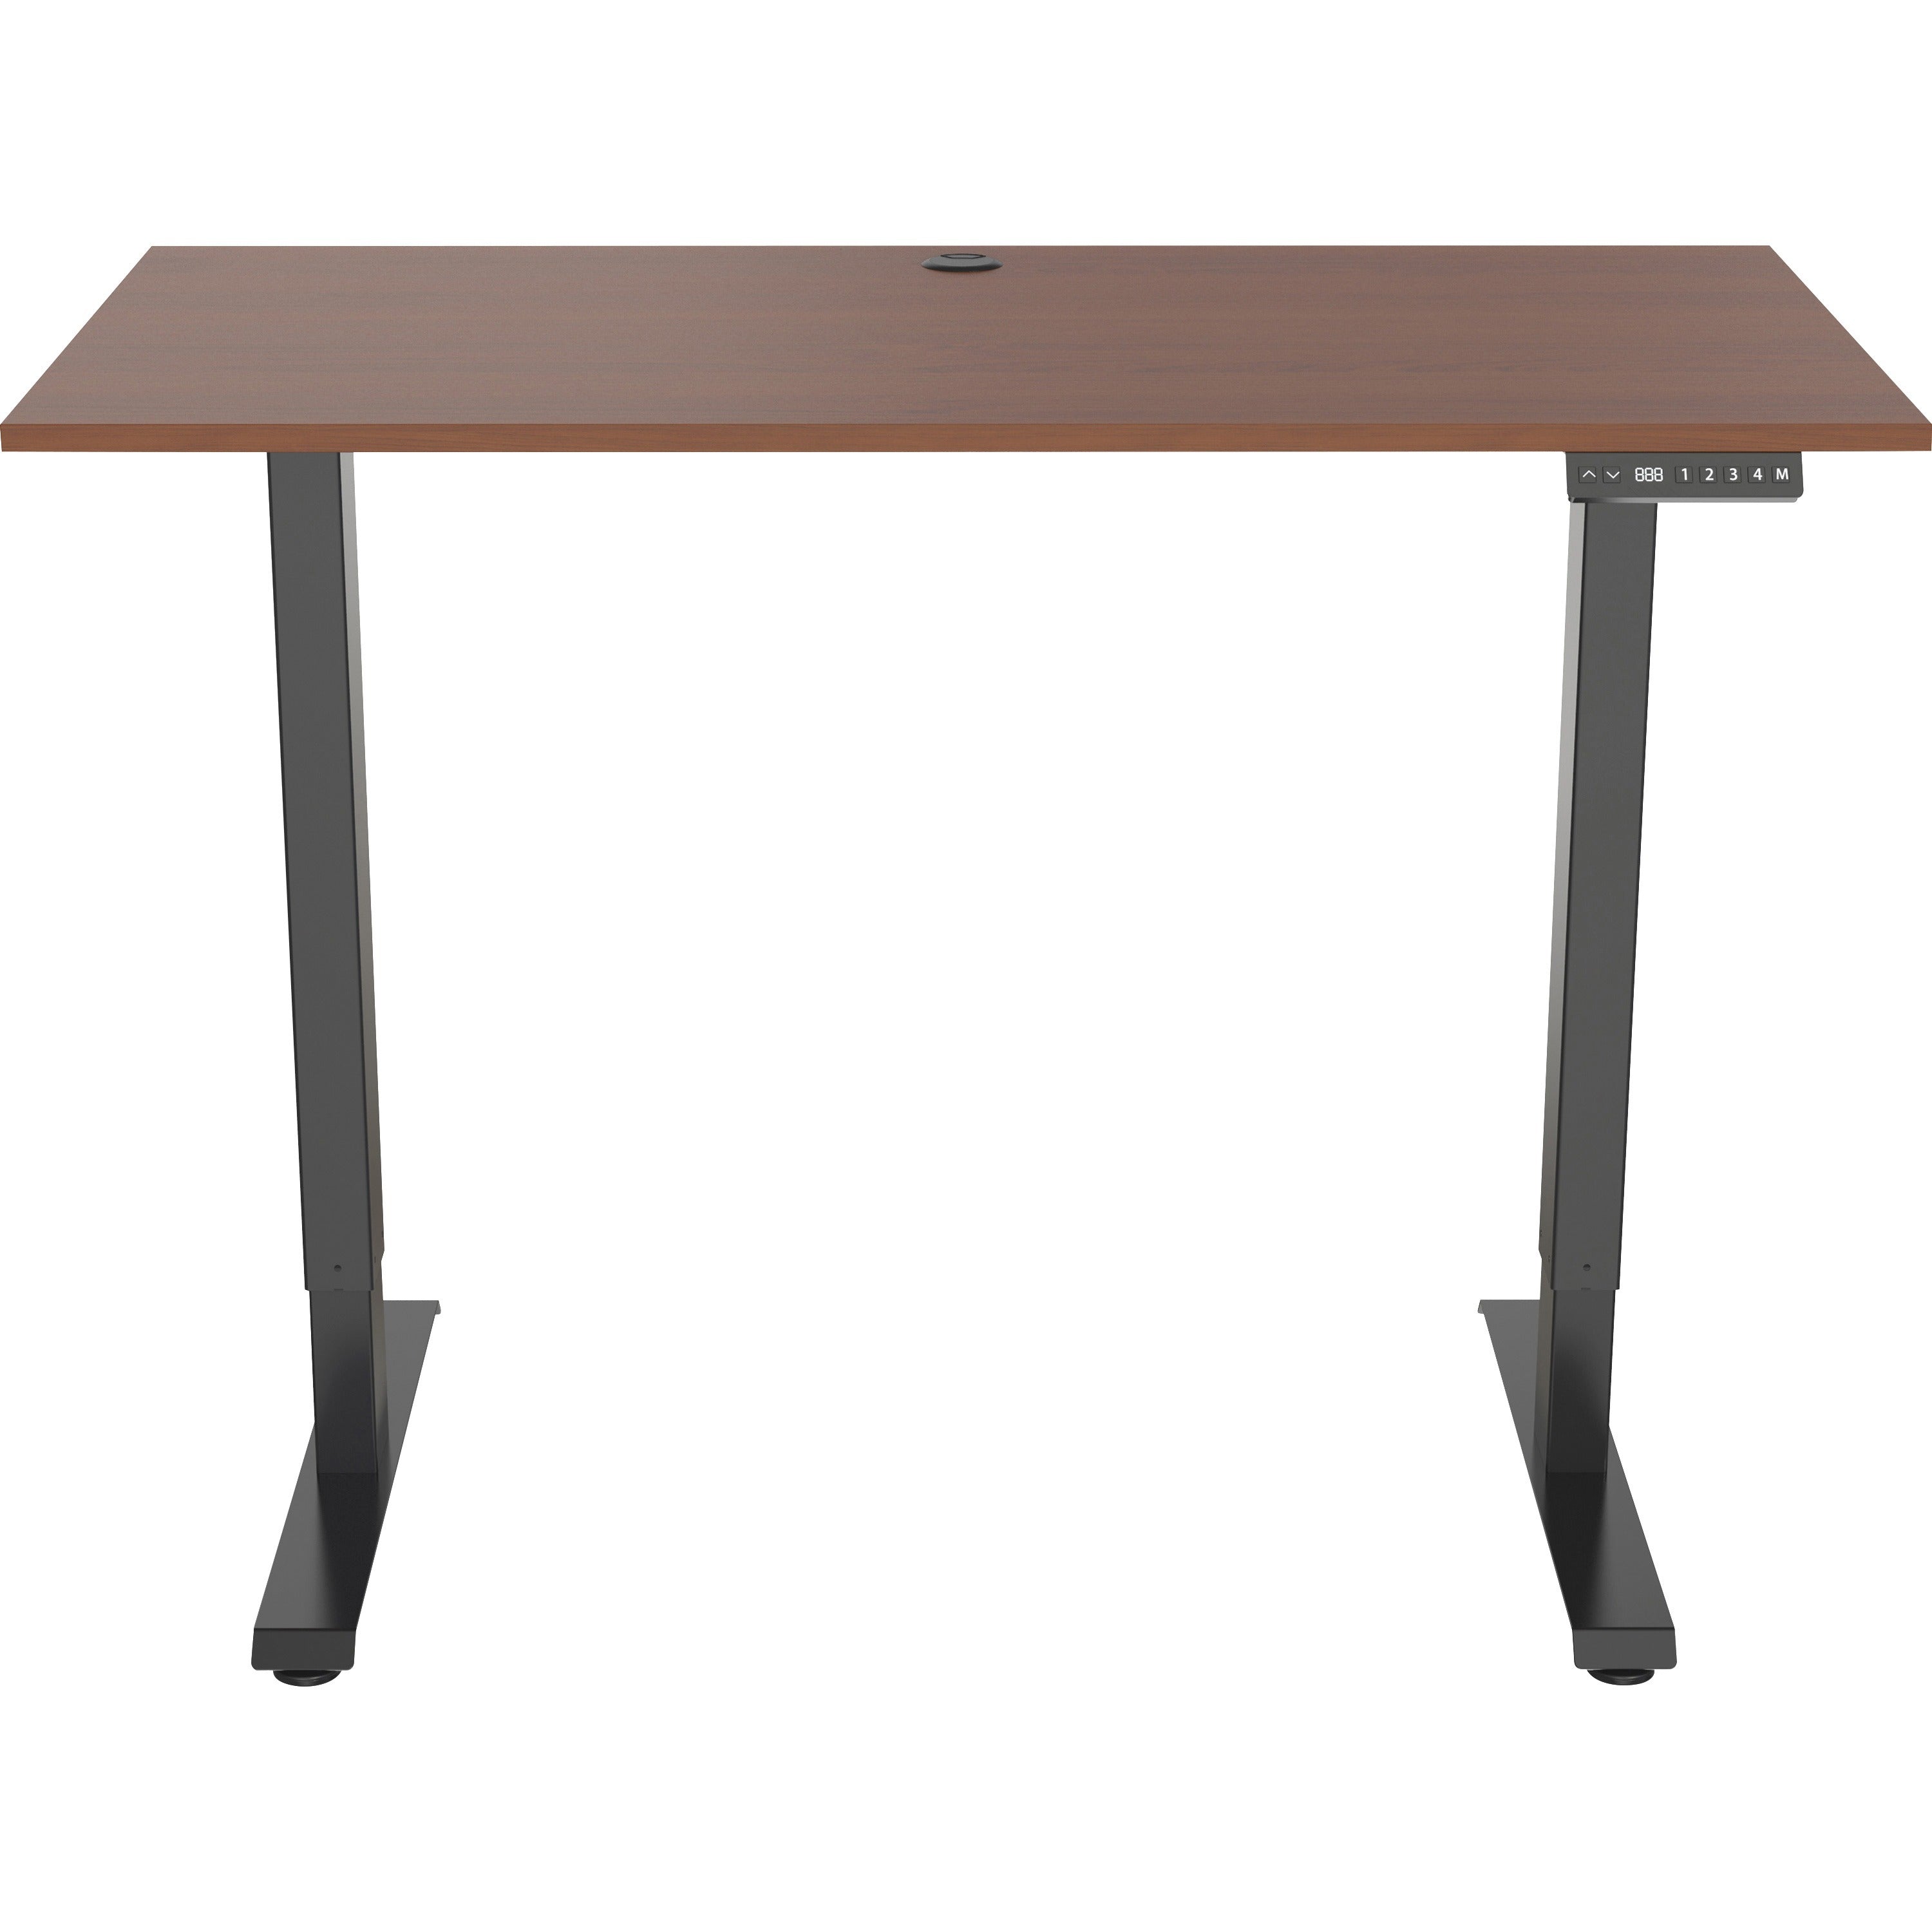 lorell-height-adjustable-2-motor-desk-for-table-topdark-walnut-rectangle-top-black-t-shaped-base-176-lb-capacity-adjustable-height-2890-to-4720-adjustment-48-table-top-length-x-24-table-top-width-x-070-table-top-thickness-472_llr03620 - 2